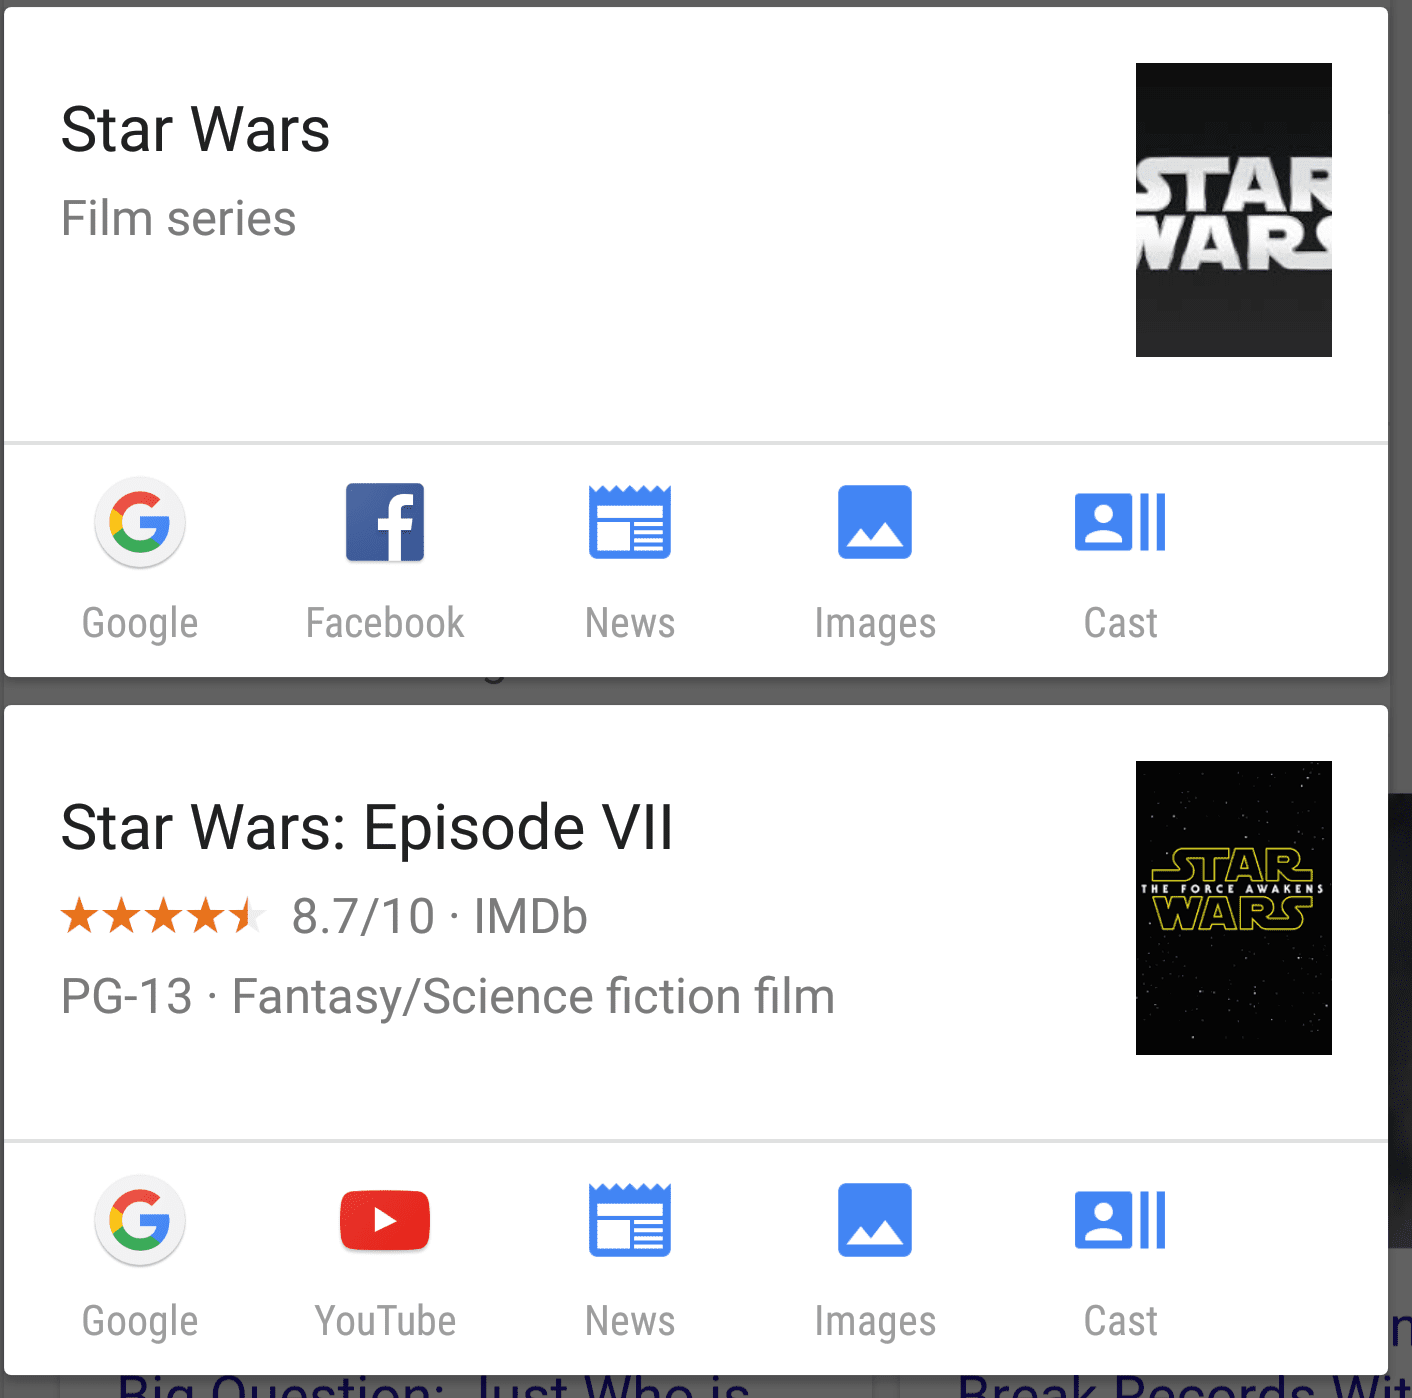 Google Now on Tap: Film